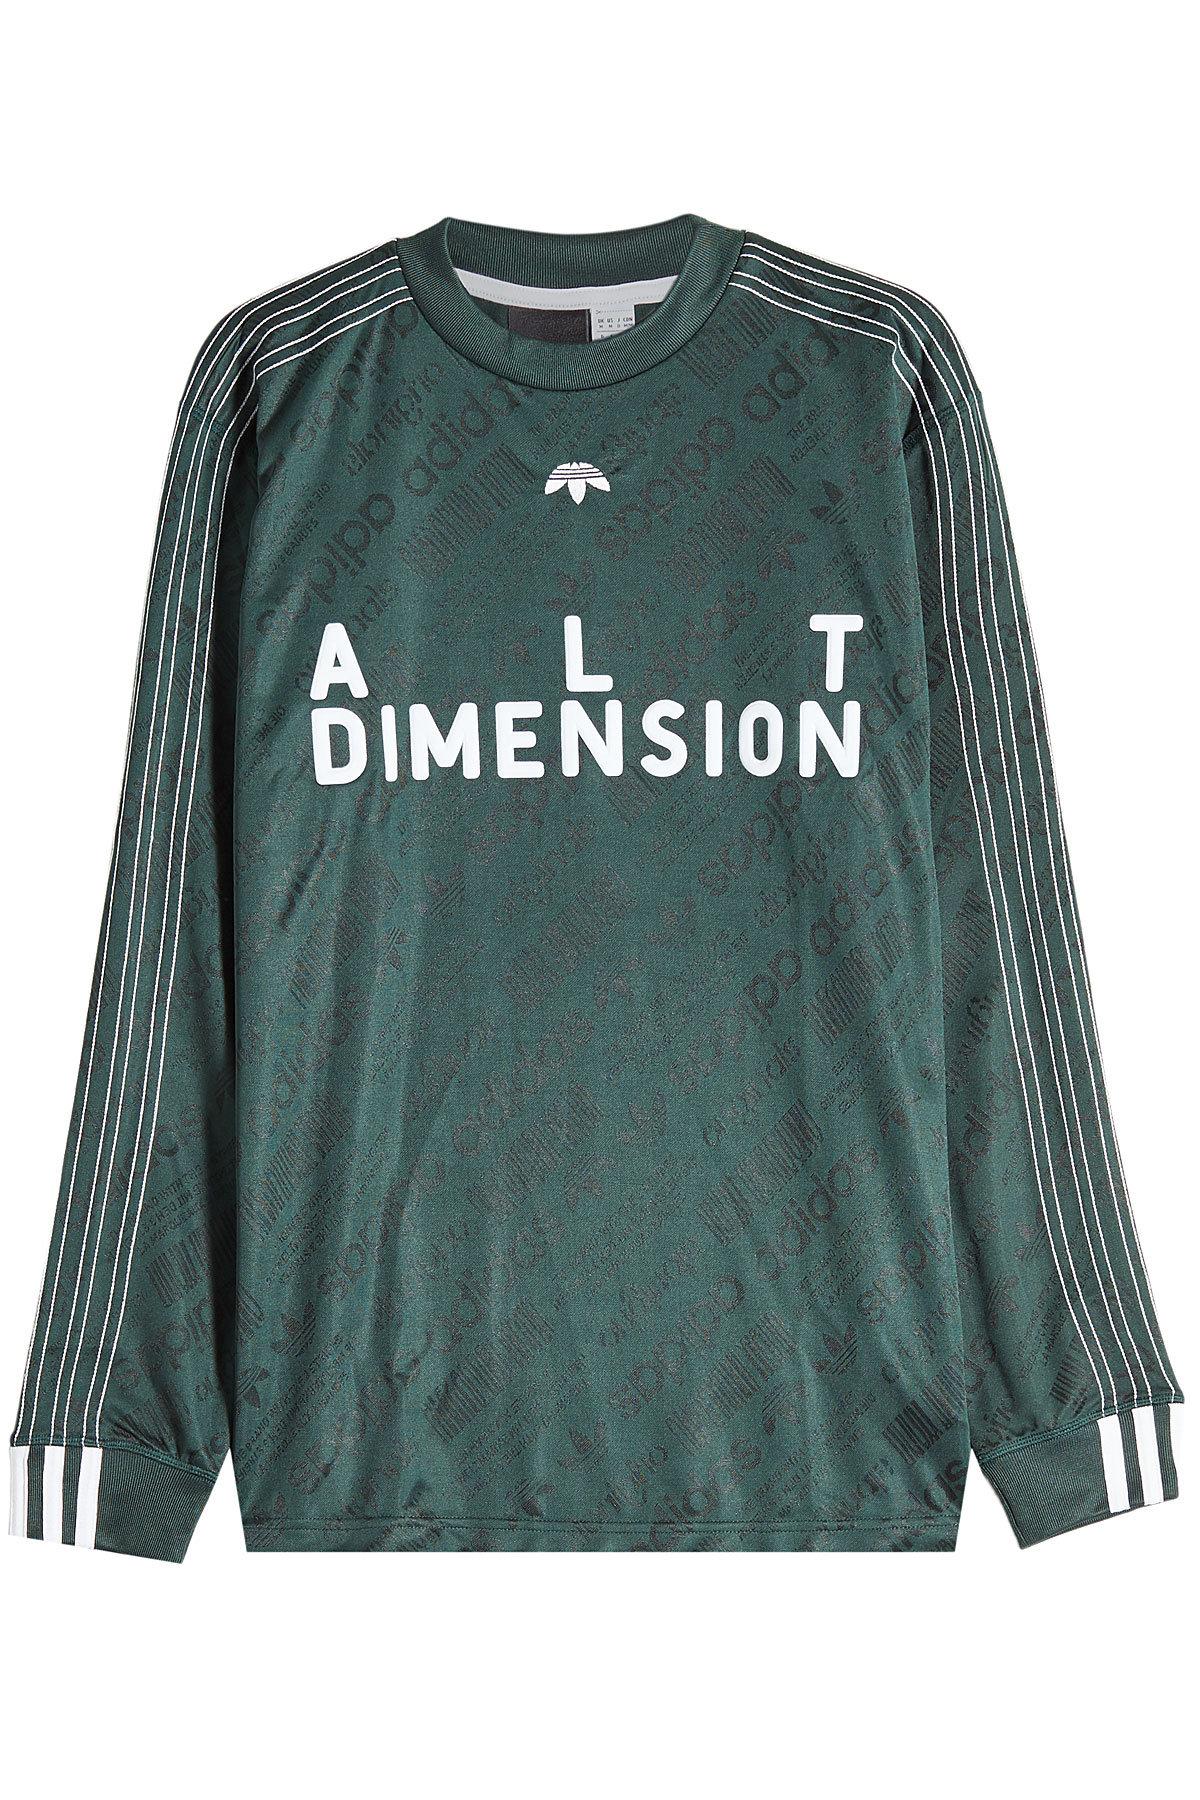 alt dimension adidas shirt